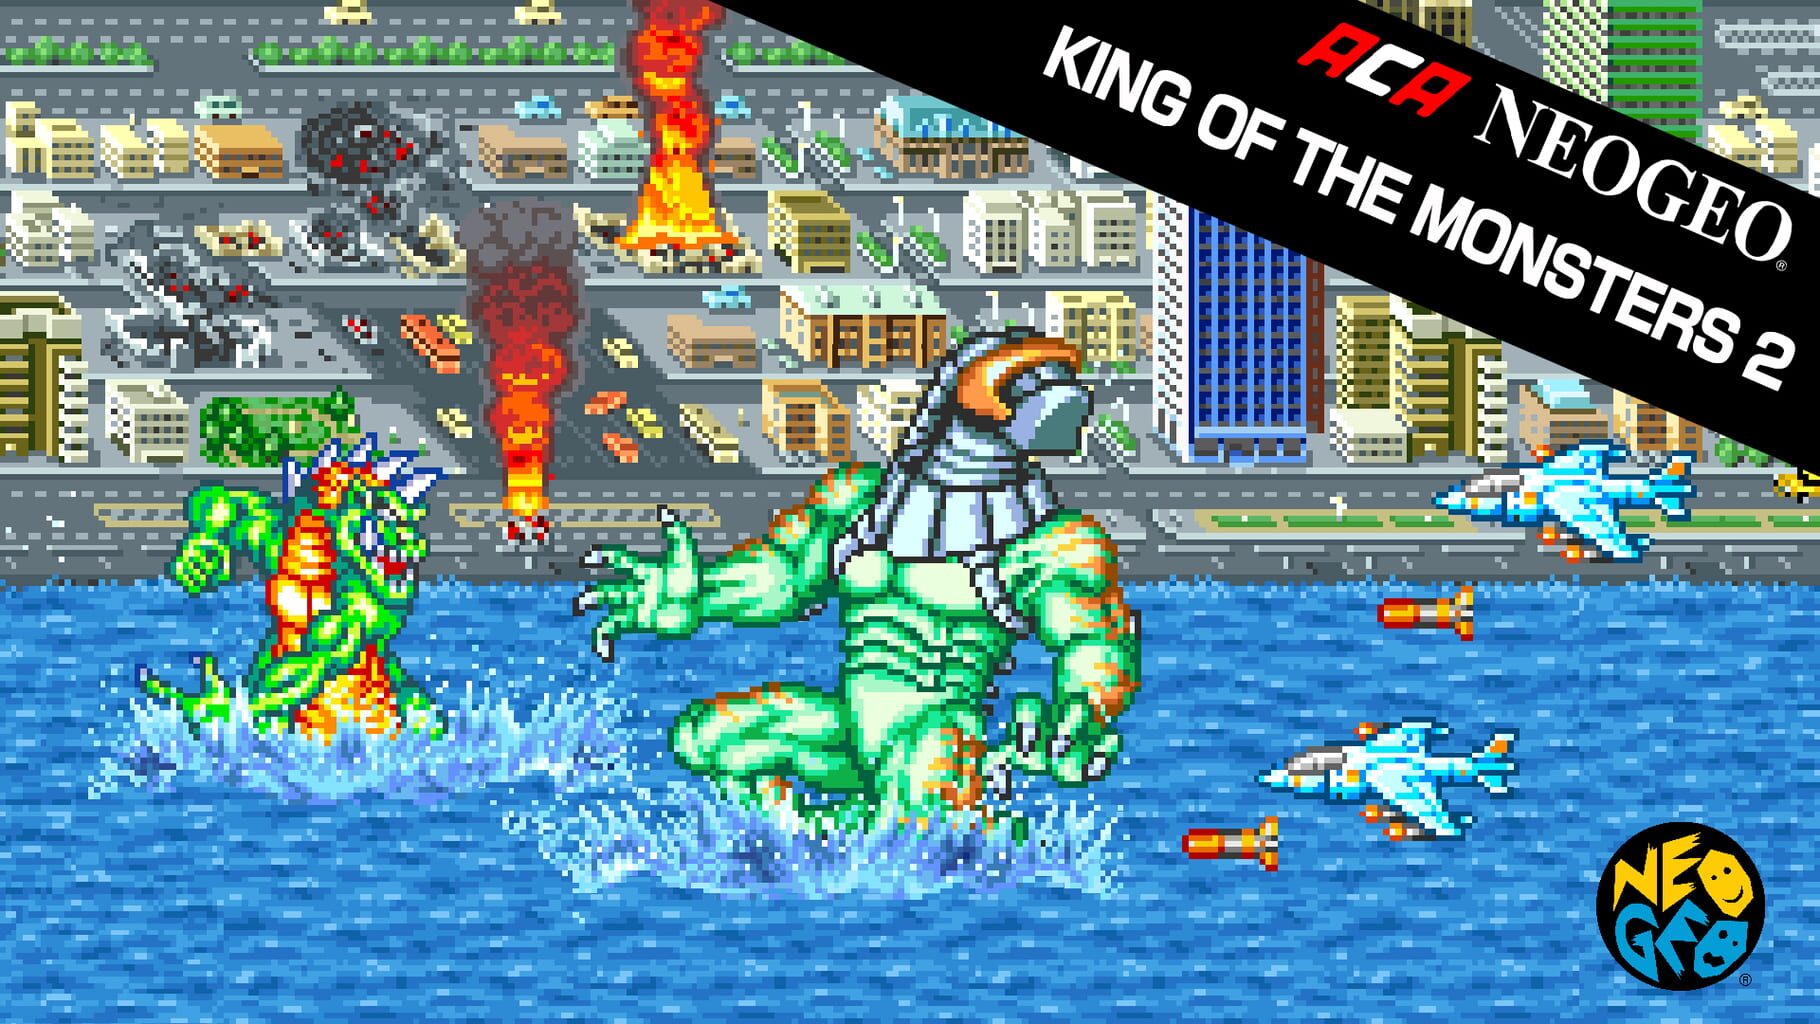 ACA Neo Geo: King of the Monster 2 artwork